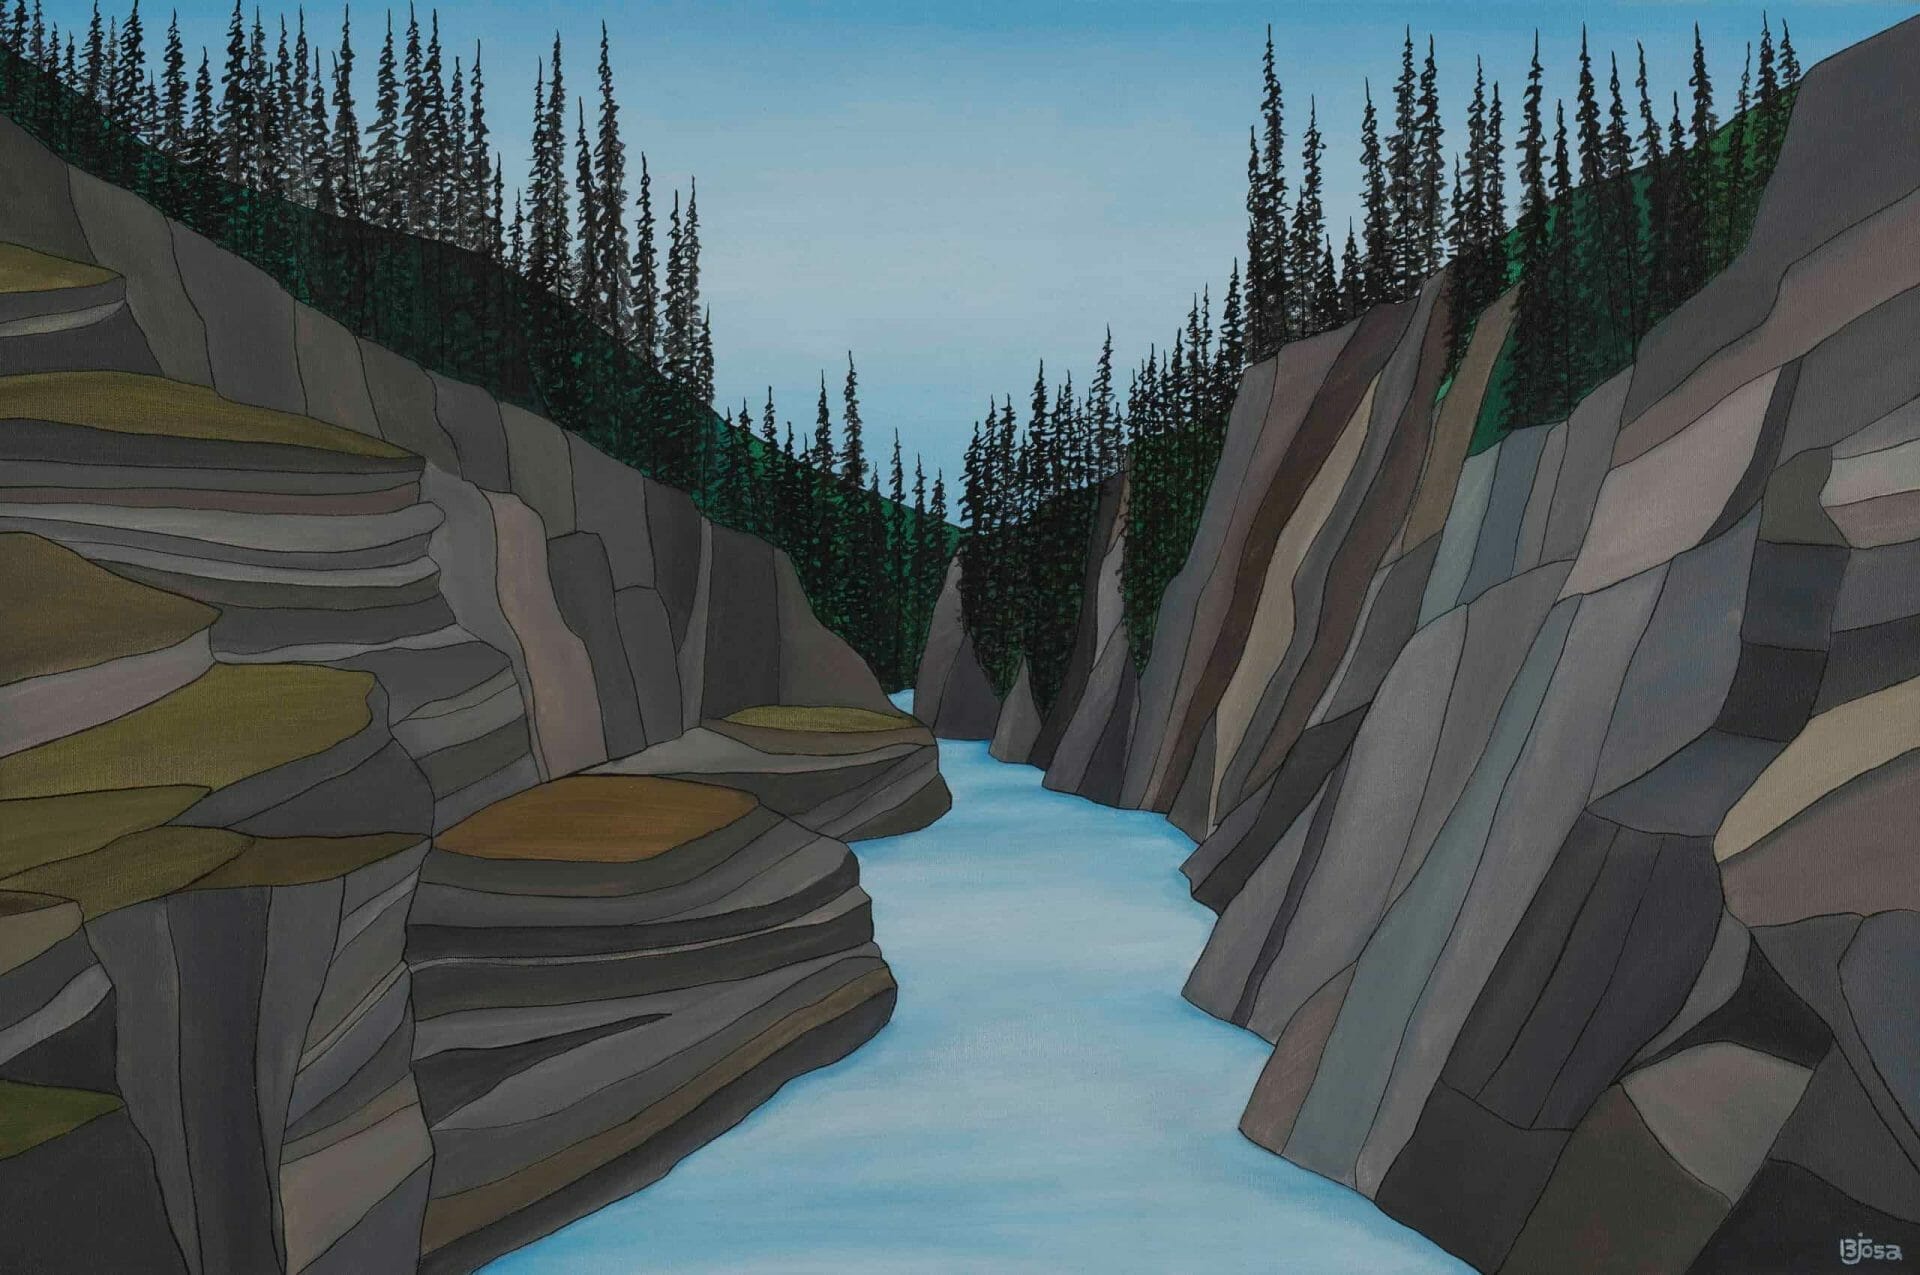 Canyon Down Kicking Horse - Canadian Original Artwork For Sale by BJ Sosa - Calgary, AB Local Artist - Mountains